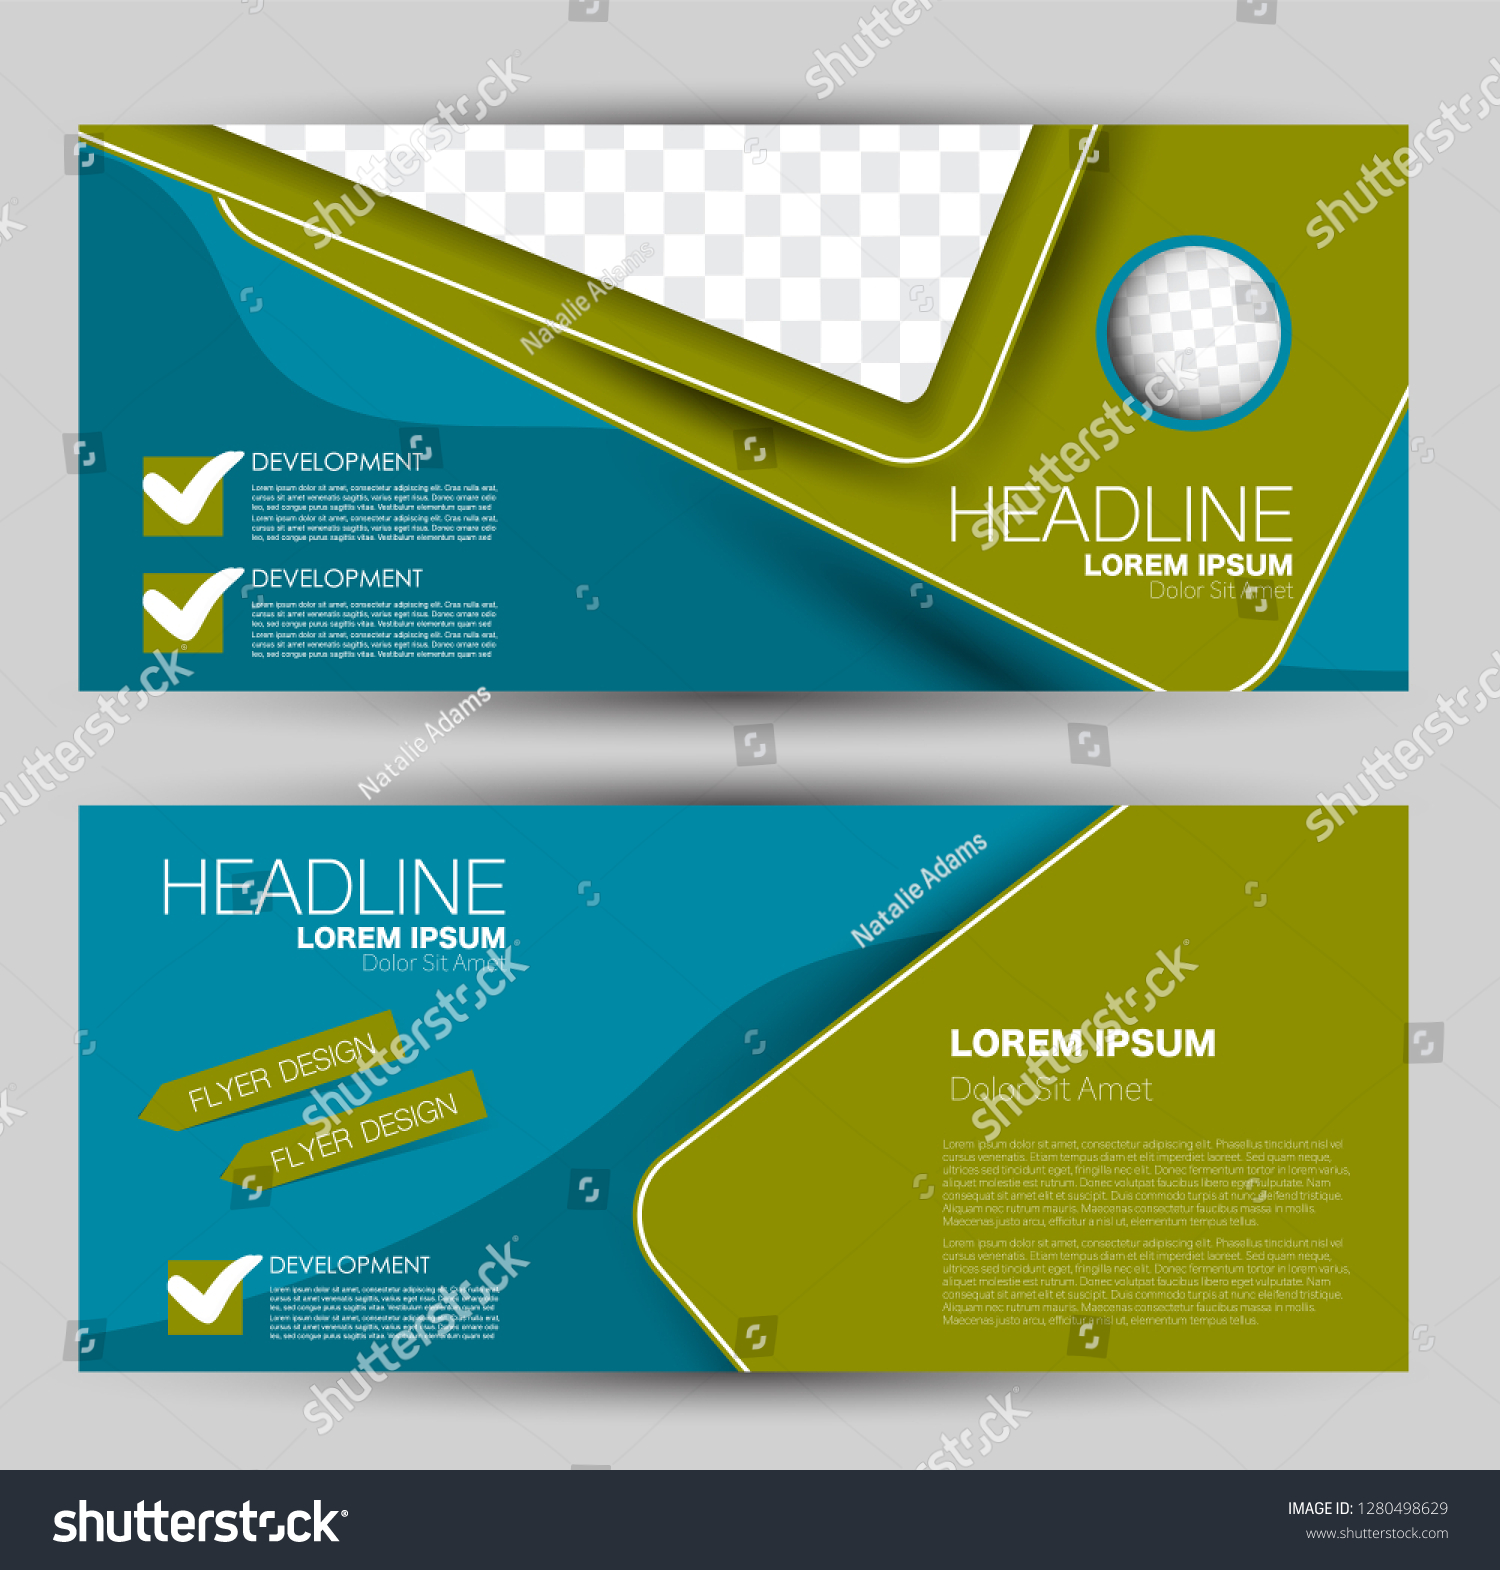 Banner Advertisement Flyer Design Web Template Stock Vector Royalty Free